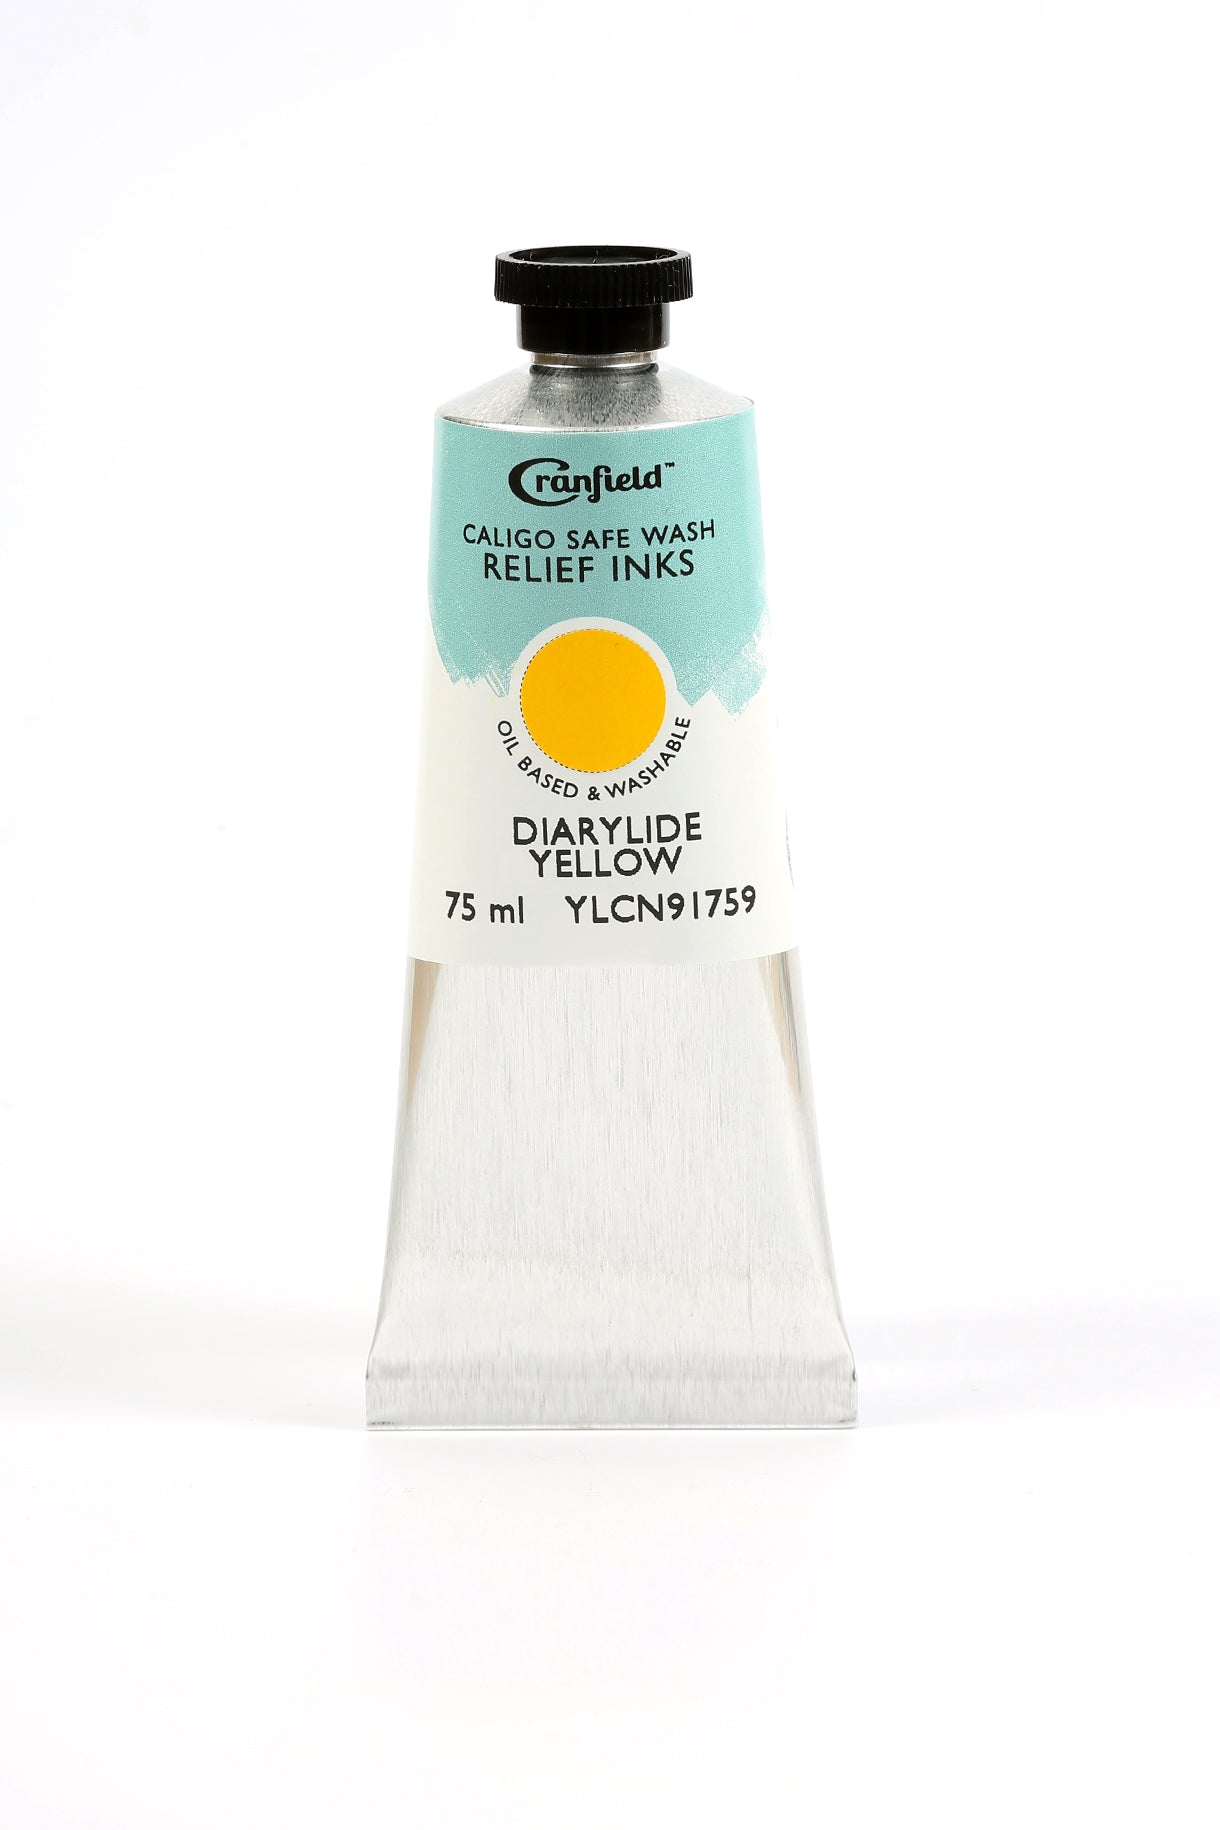 Cranfield Caligo Safe Wash Relief Printing Ink Dairylide Yellow 75g tube